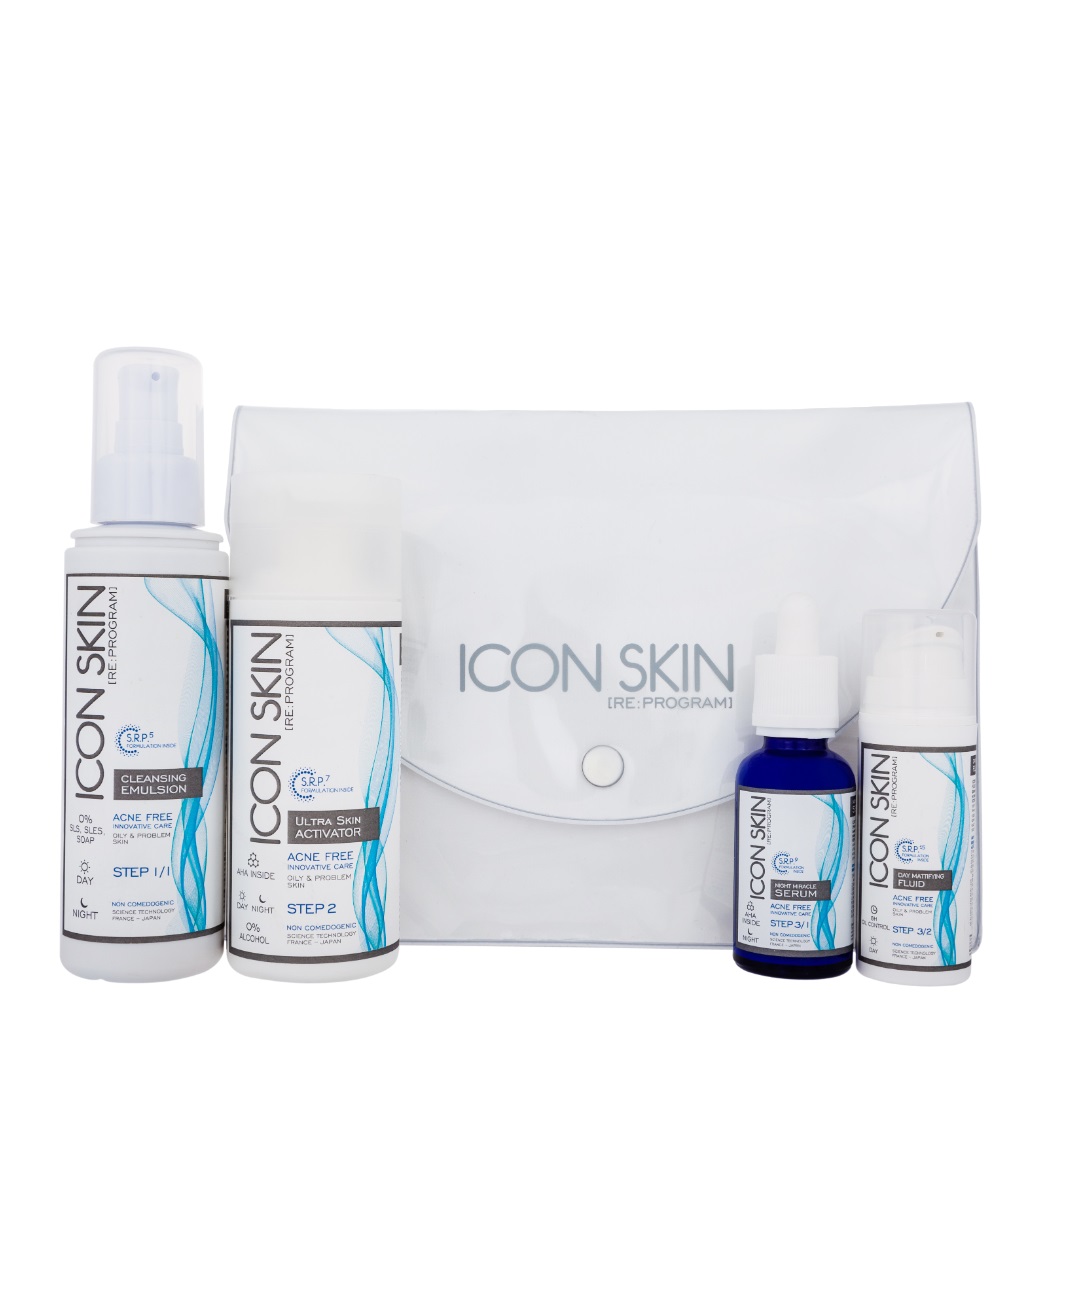 Icon skin 30. Icon Skin набор косметики. Icon Skin professional Skin Care набор. Набор для ухода за кожей лица. Набор косметики для ухода за кожей.